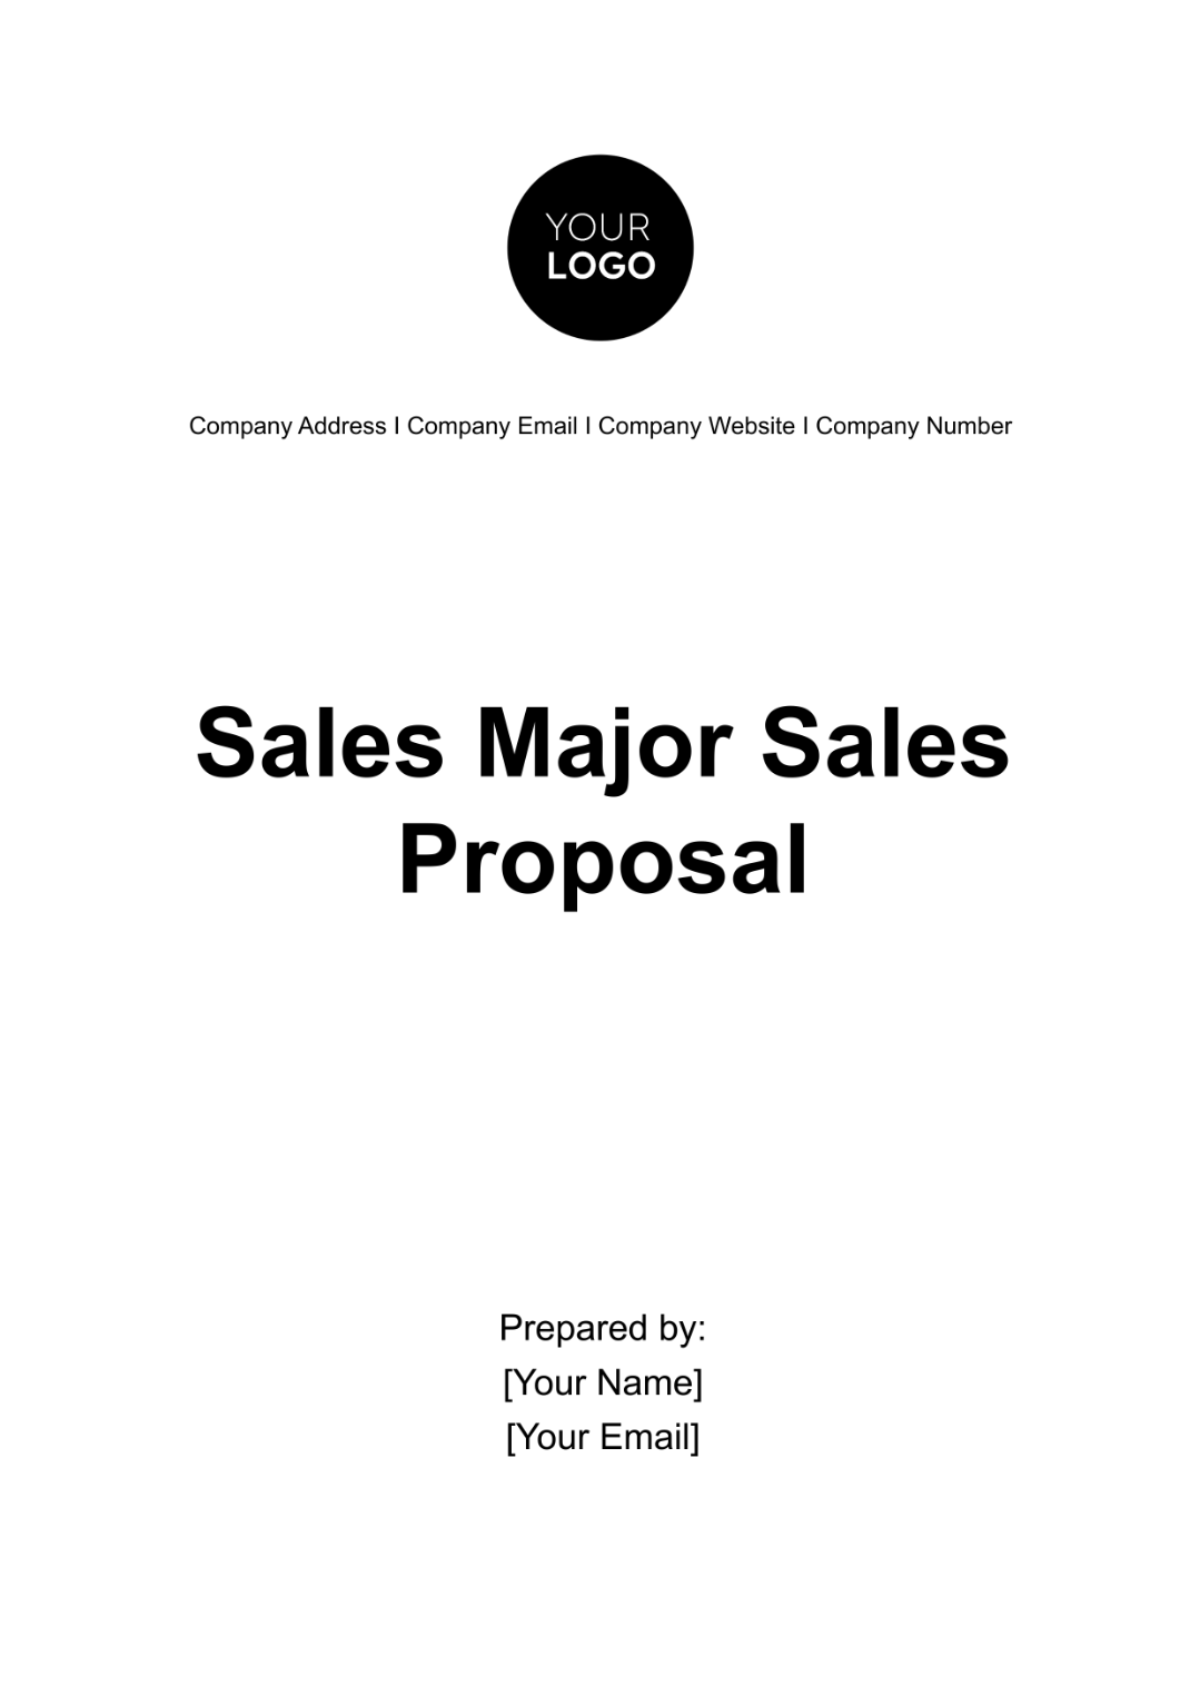 Free Sales Major Sales Proposal Template